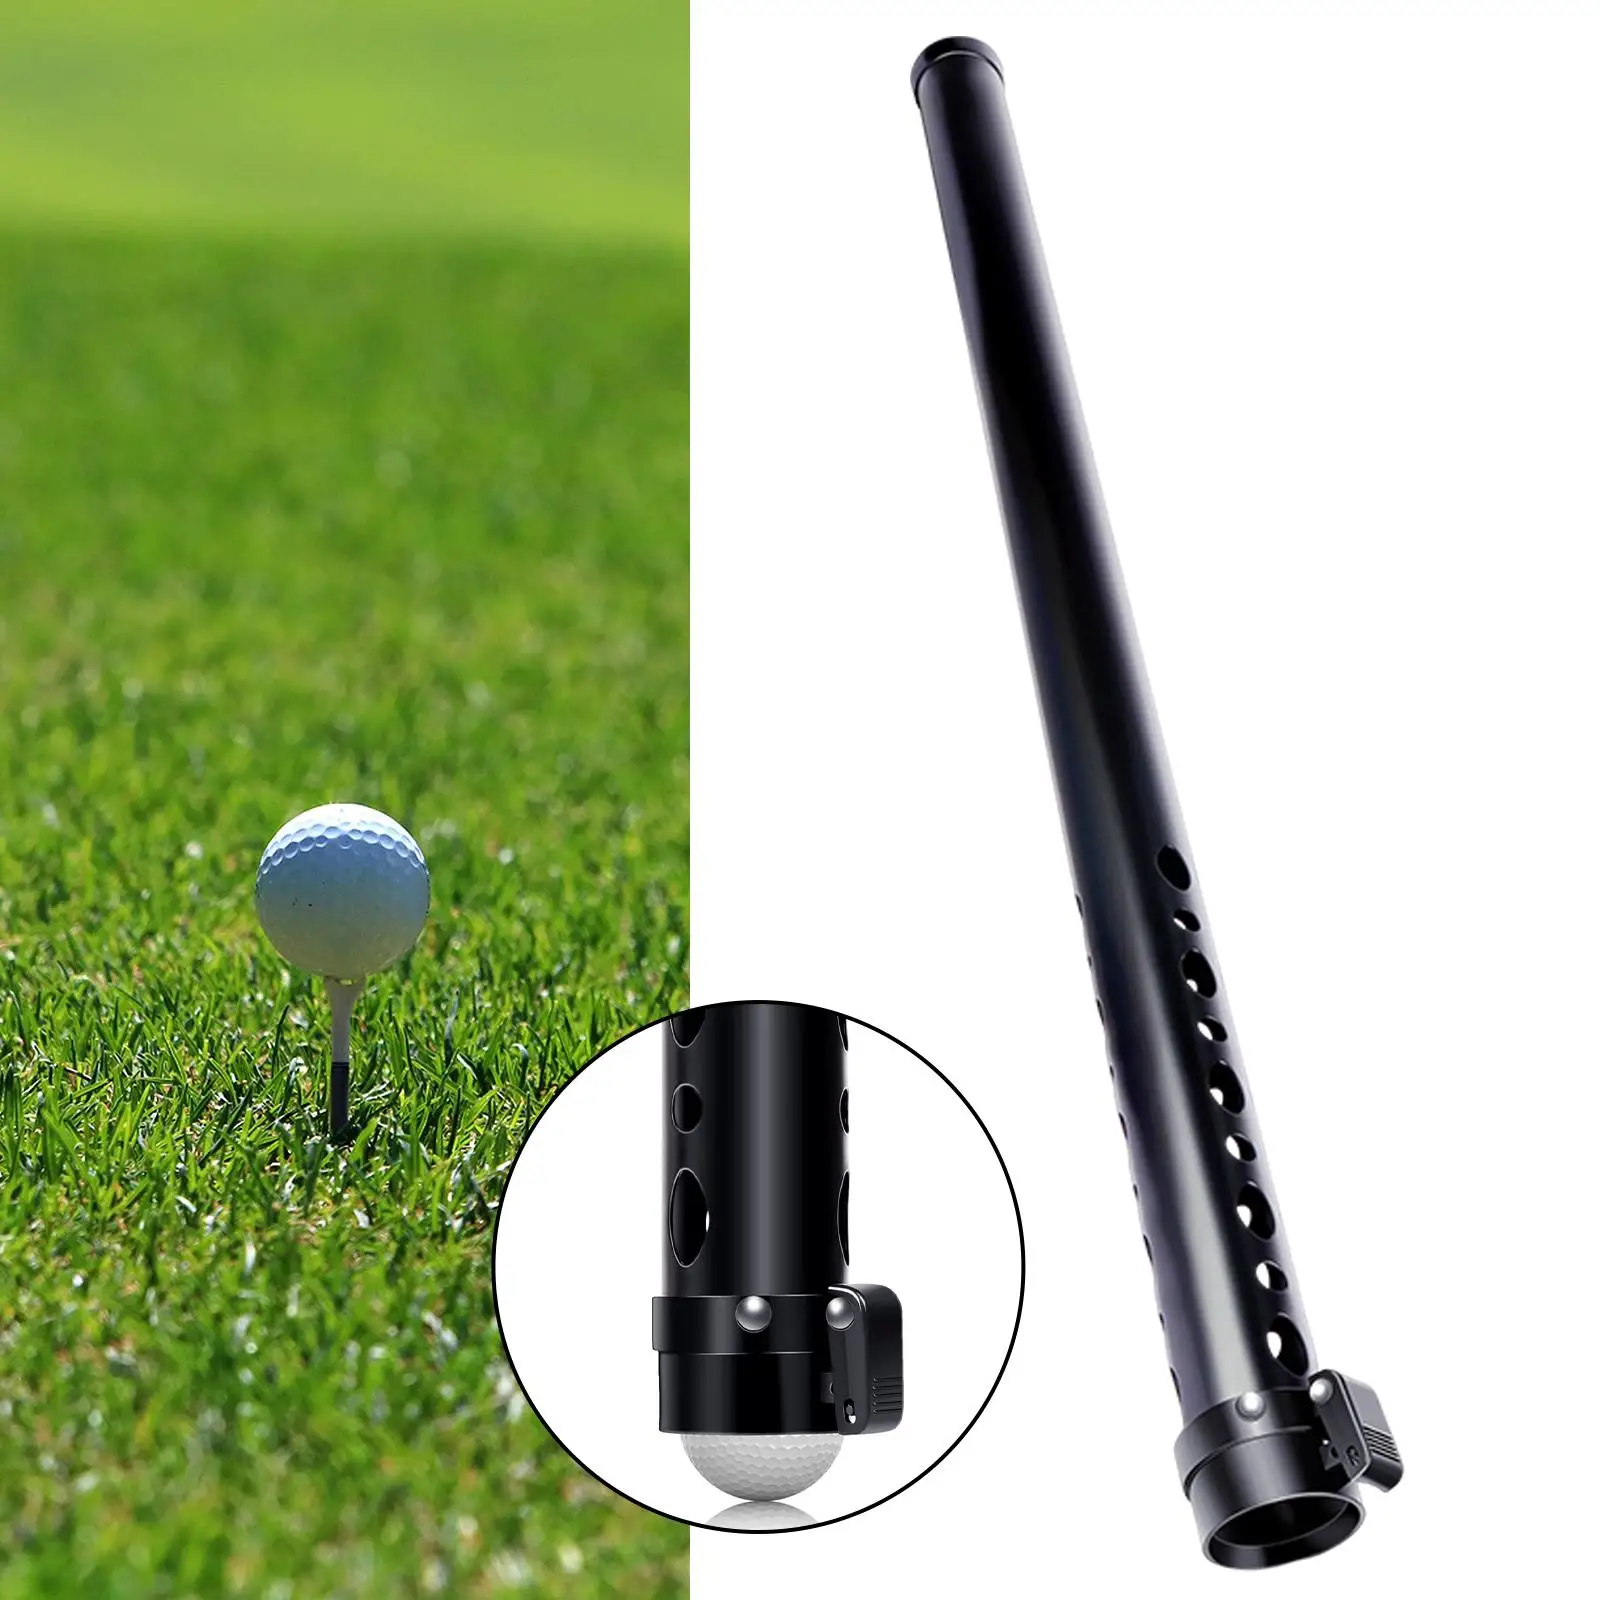 

Portable Golf Ball Retriever Golf Ball Picker Shag Tube Storage Carry Holds 22 Balls Pick up Golf Practice Aid Equipment